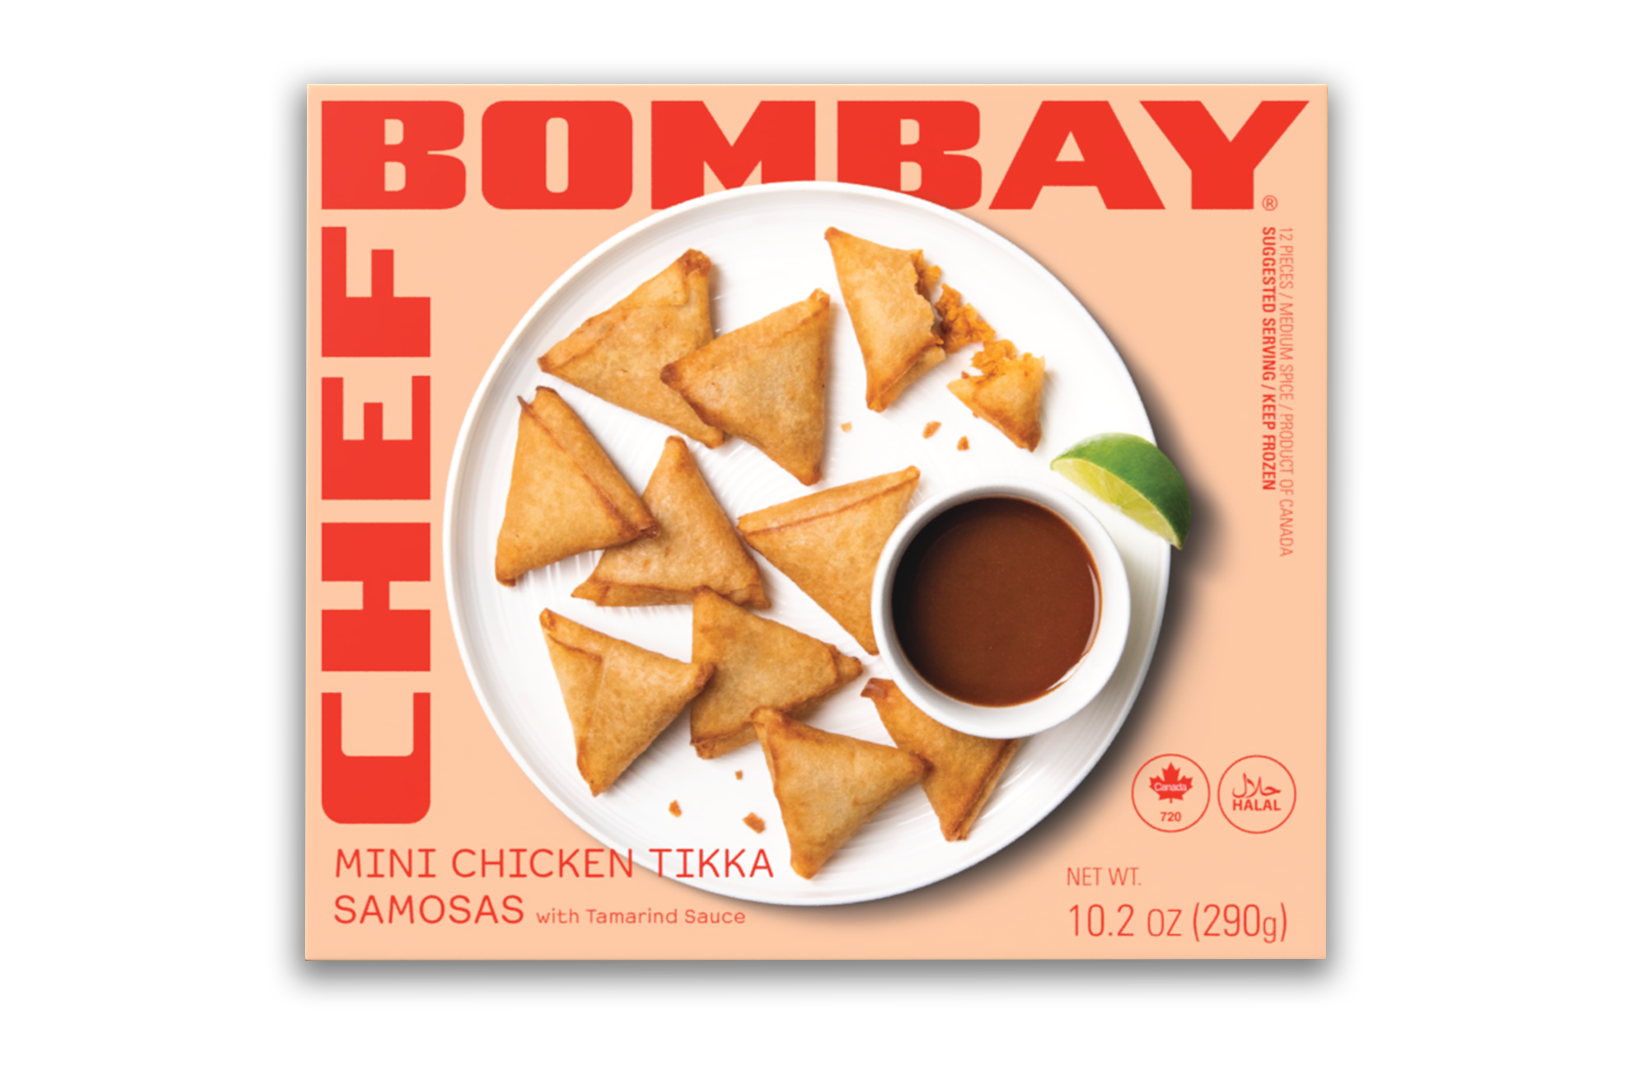 Chef Bombay Certified Halal Samosas